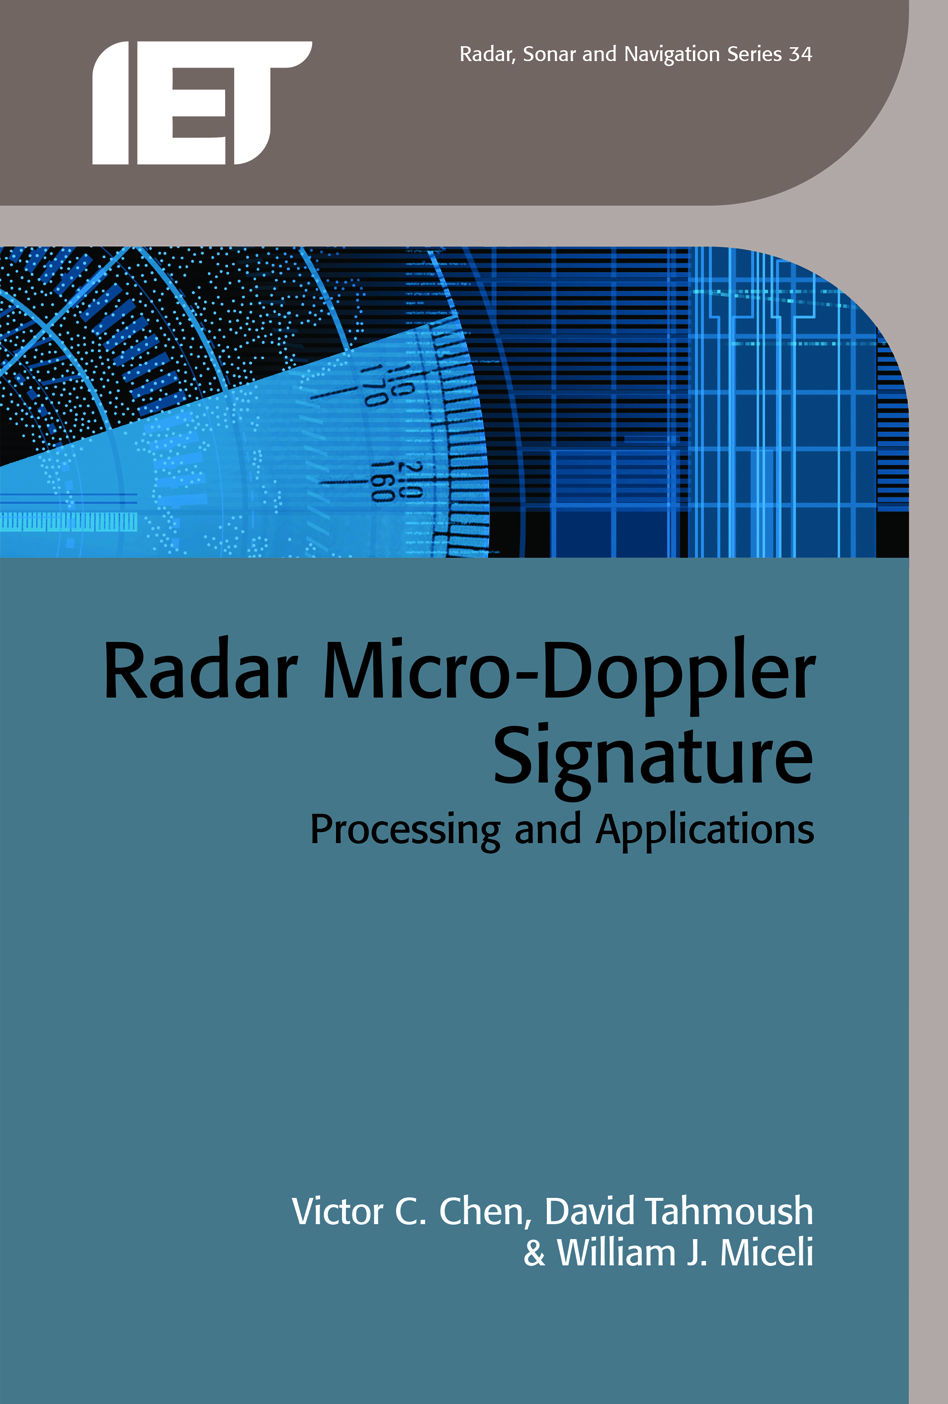 Radar Micro-Doppler Signatures, Processing and applications